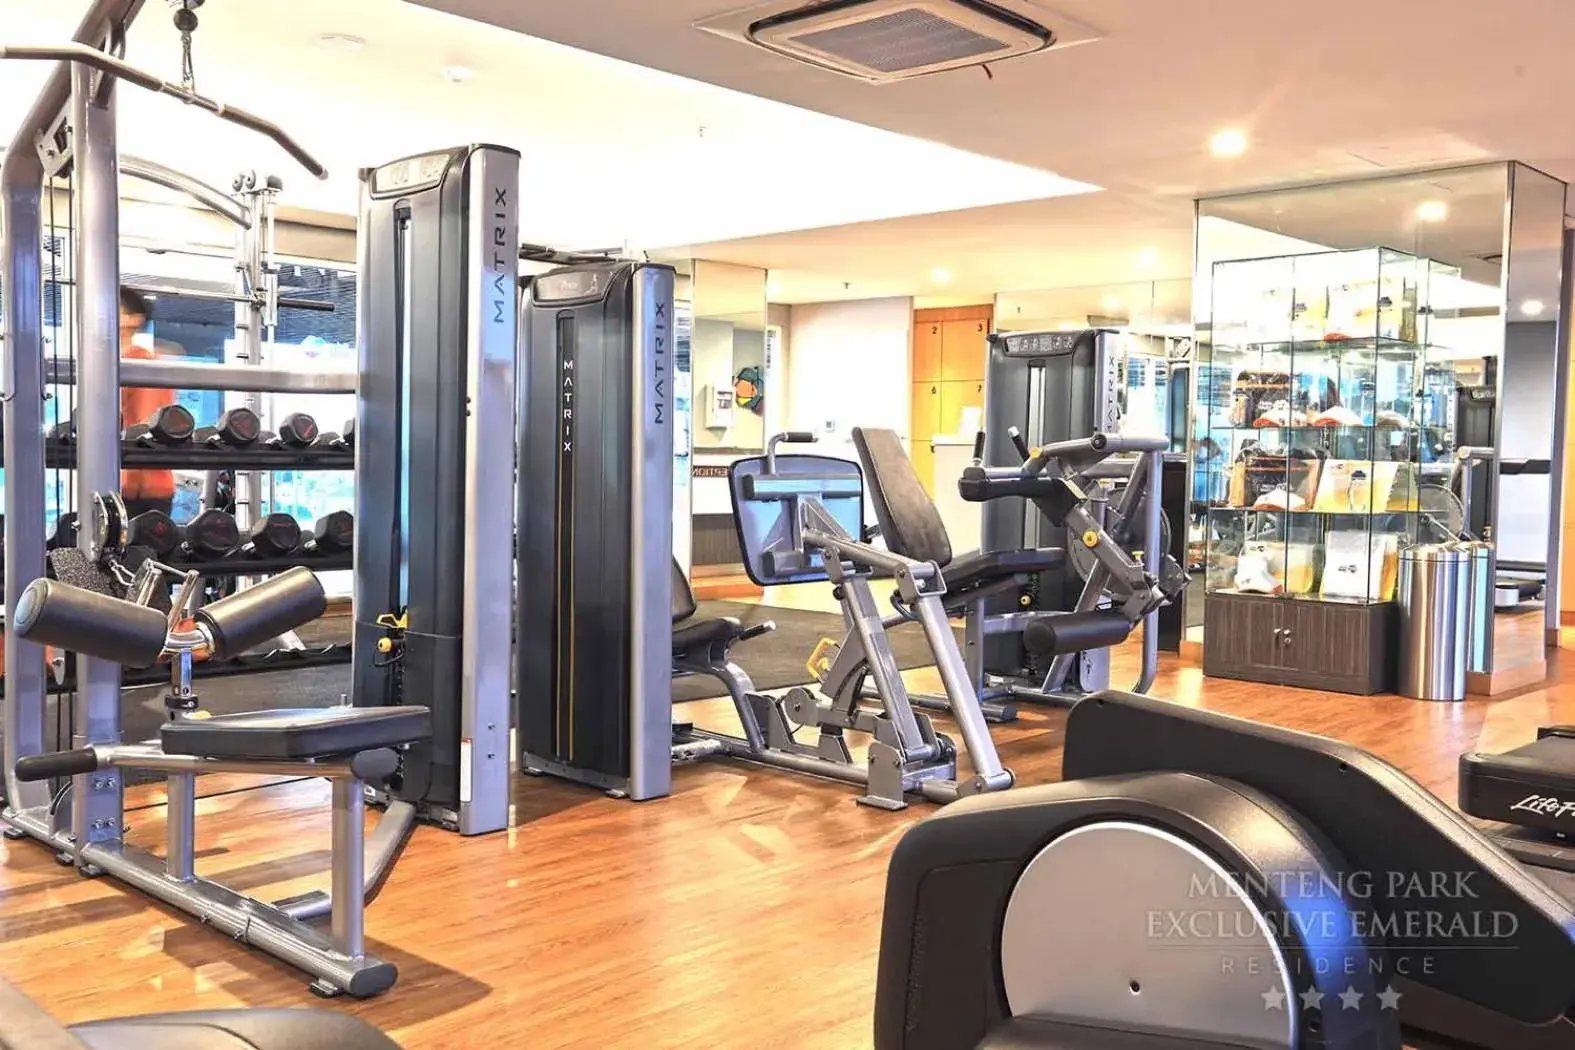 Fitness Center/Facilities in Menteng Park Exclusive Emerald